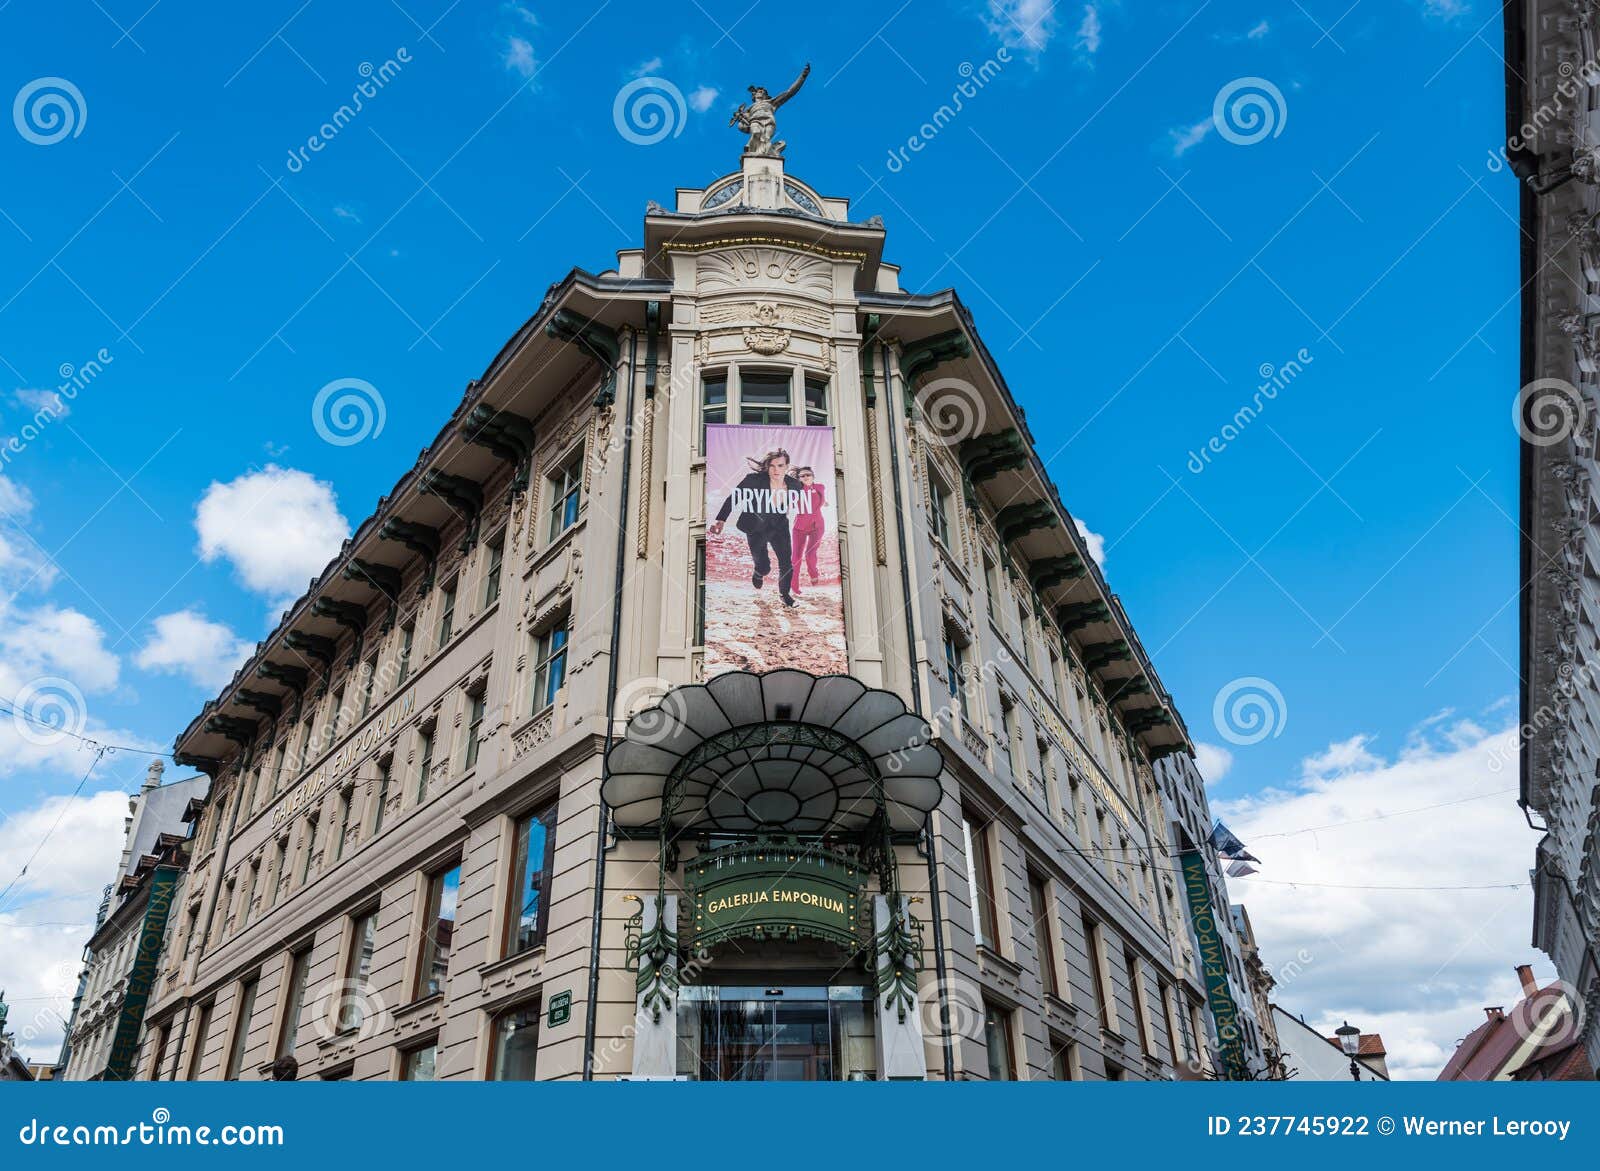 https://thumbs.dreamstime.com/z/ljubljana-slovenia-facade-imperial-gallery-high-end-fashion-retail-shop-ljubljana-slovenia-facade-emperial-gallery-237745922.jpg